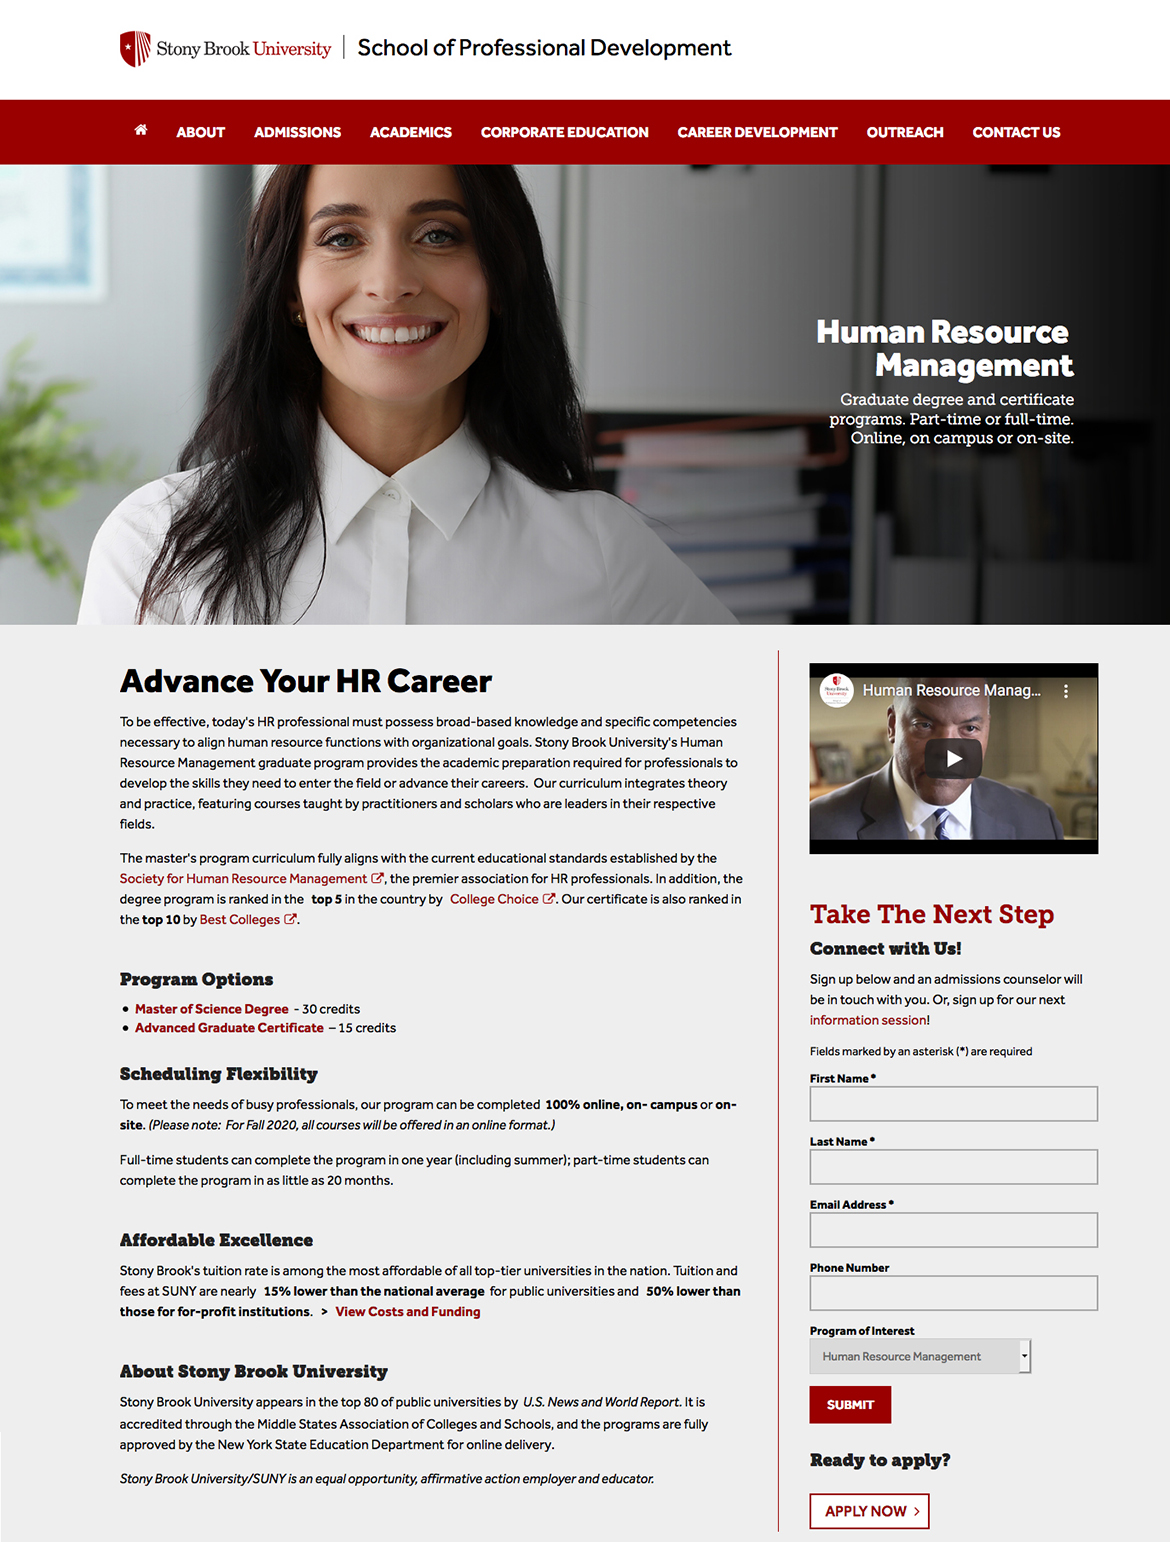 Stony Brook School of Professional Development - Human Resource Management web page